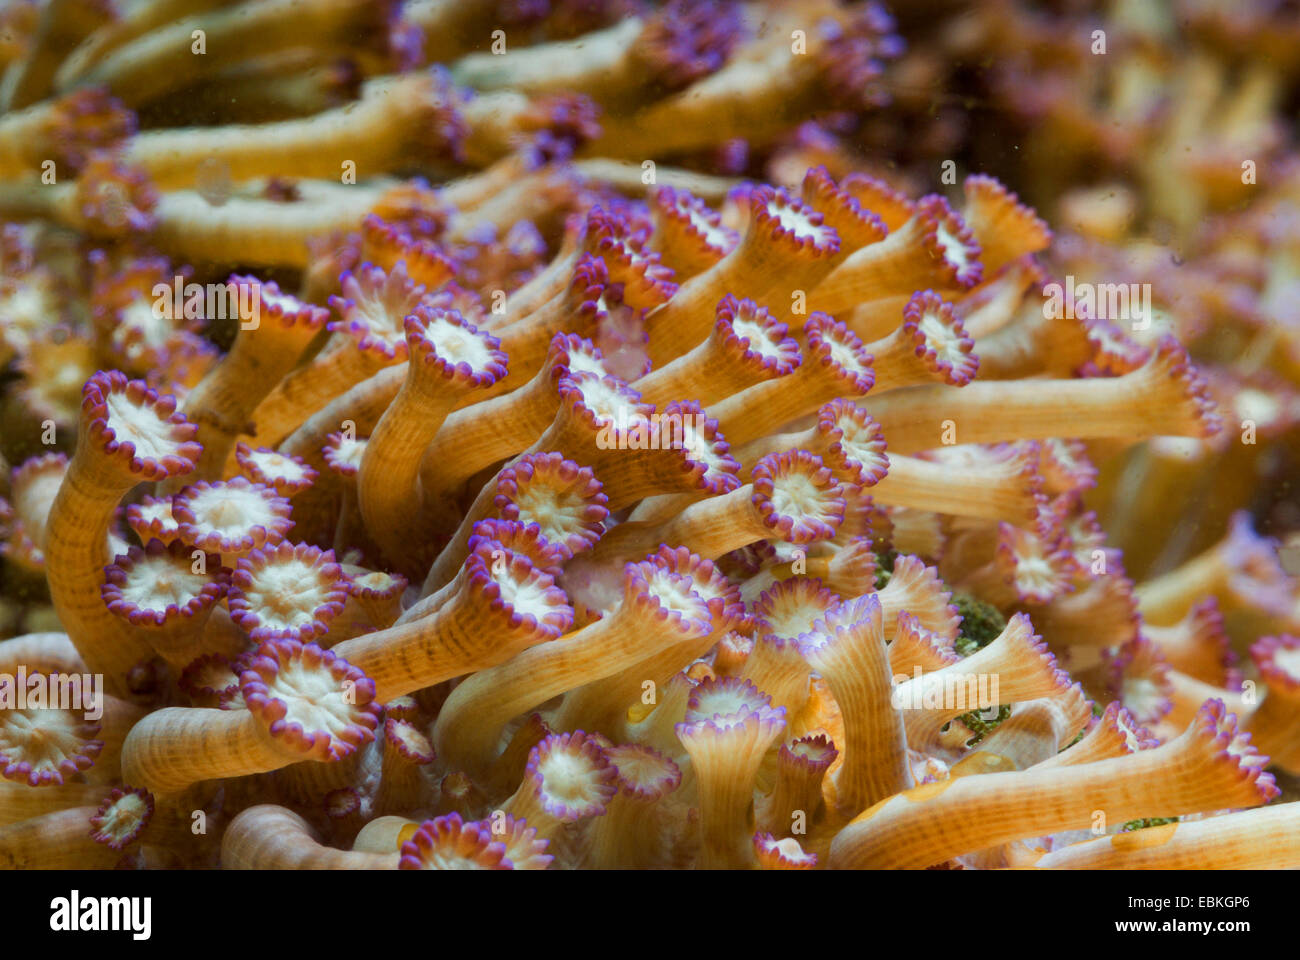 Stony Coral (Alveopora spec.), Detailansicht Stockfoto